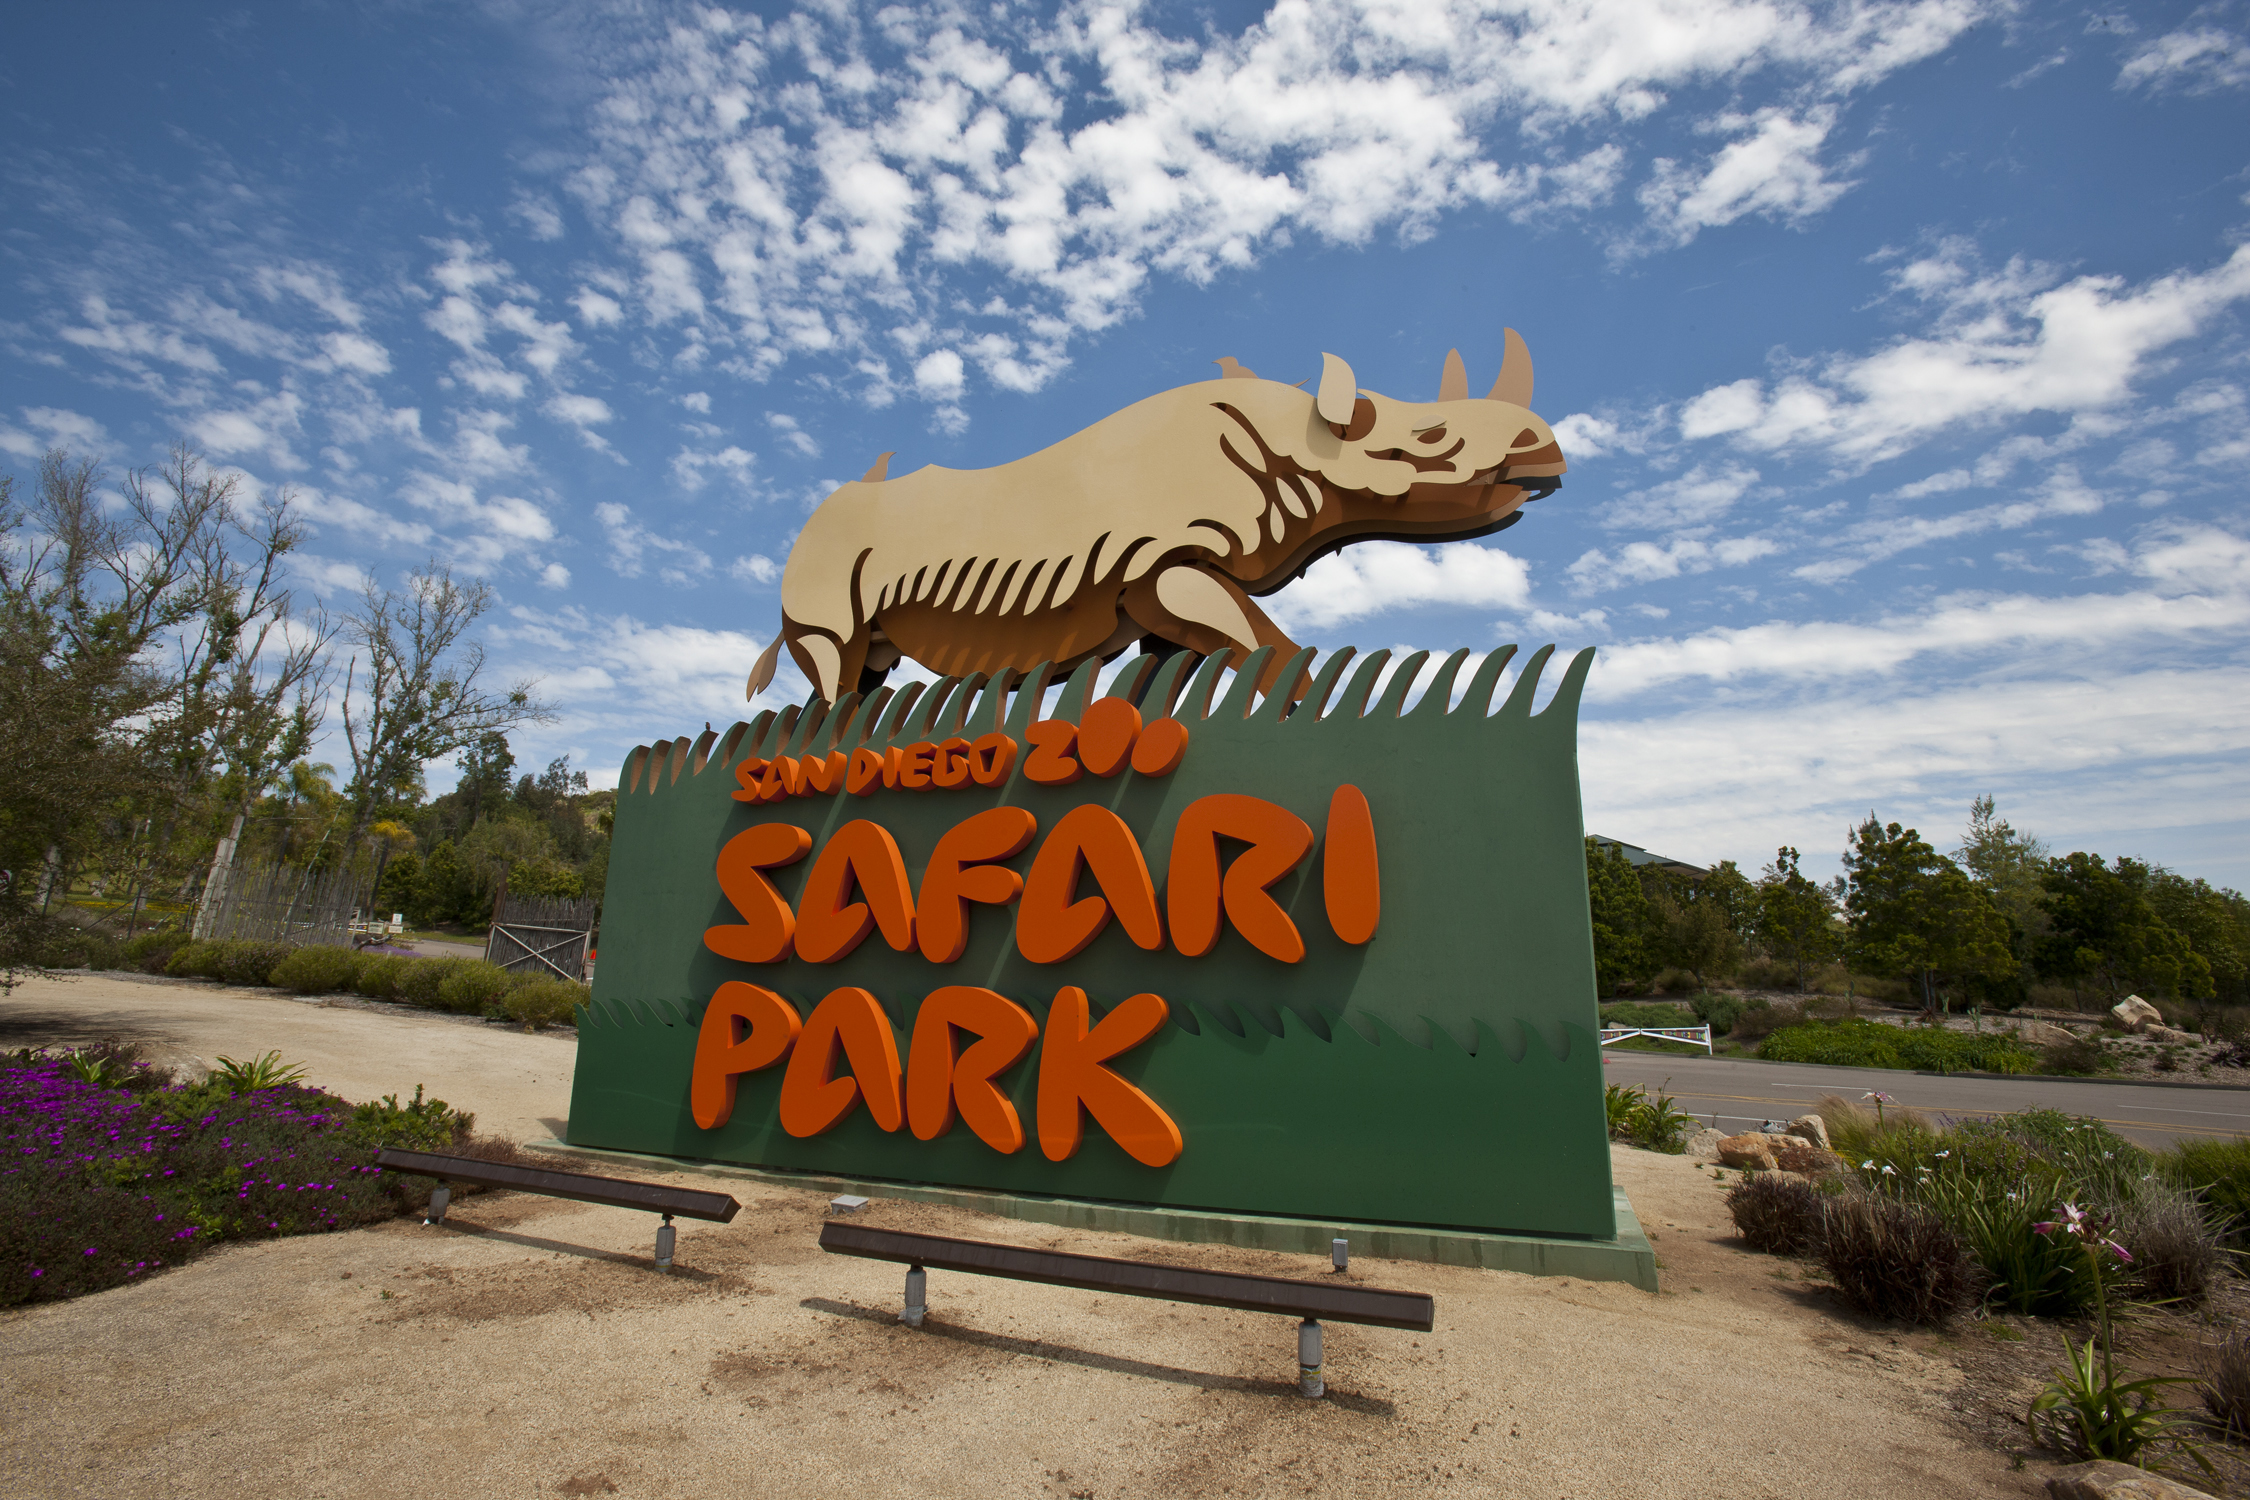 San Diego Zoo & San Diego Safari Park named for TEA Thea Classic Award